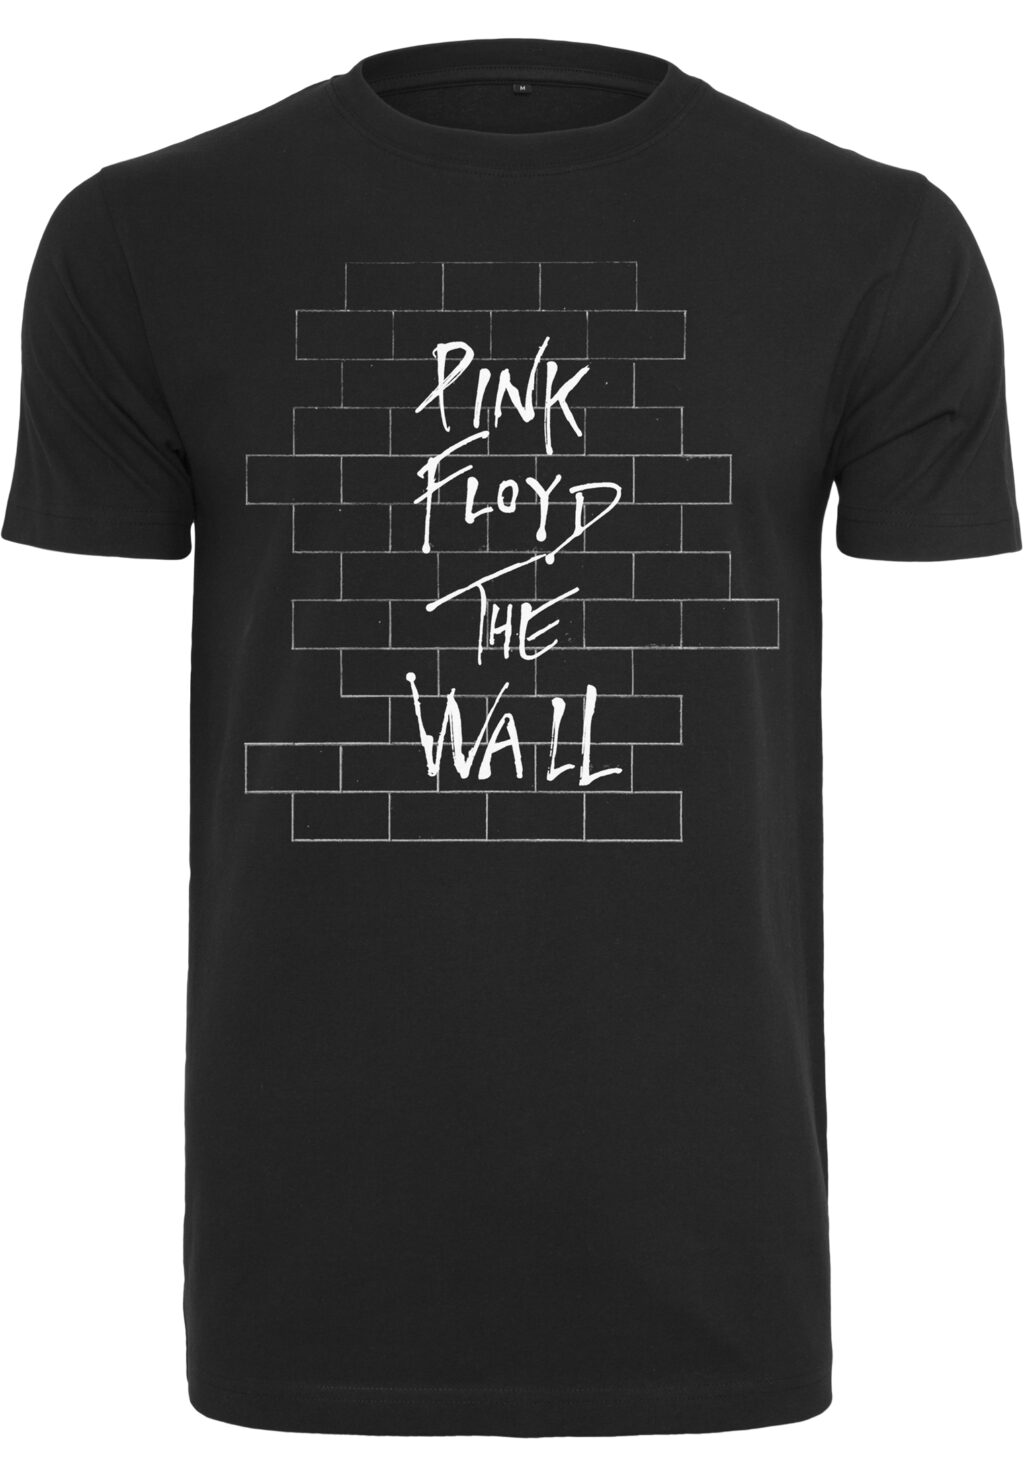 Pink Floyd The Wall Tee black MC618